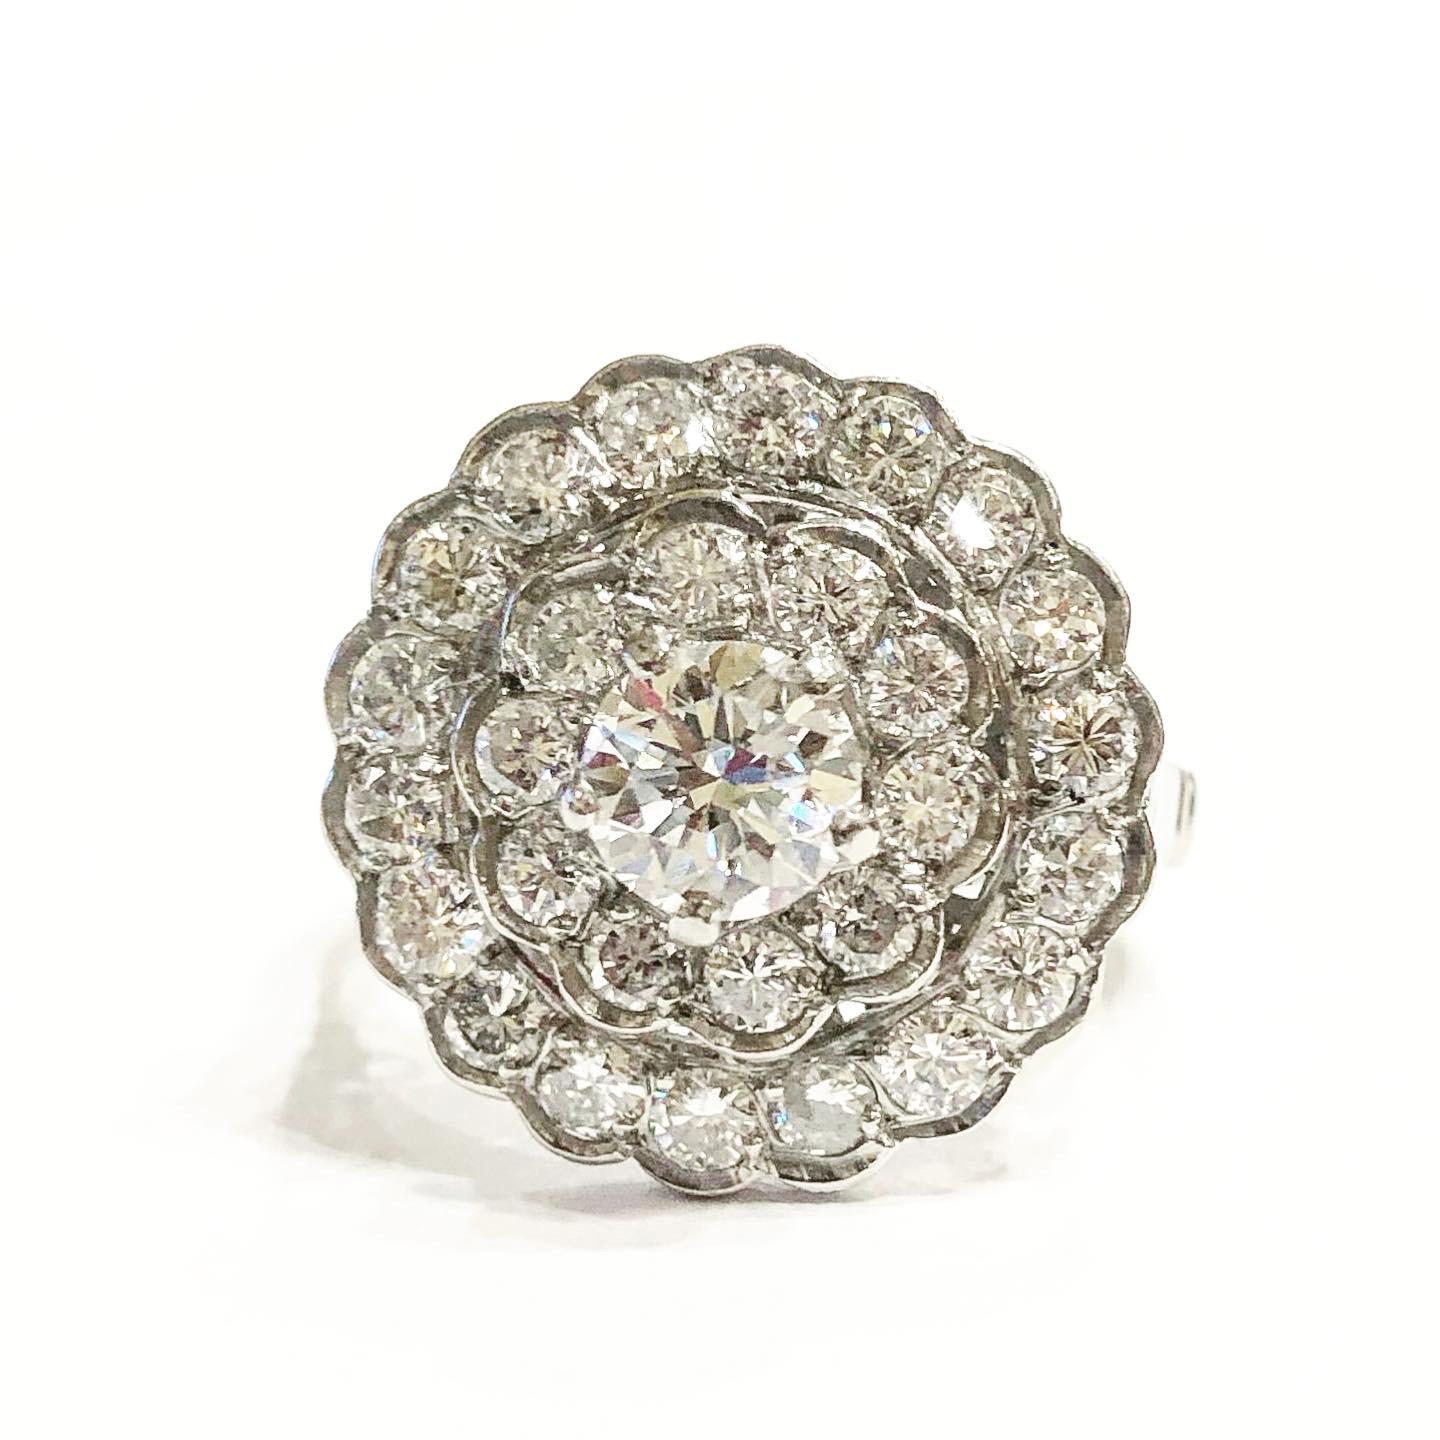 Double halo platinum diamond engagement ring with central stone.
France, circa 1940. Condition: Good..
Brilliant-cut diamonds.
Total approximate diamond carat weight: 1.98 carat: central stone 0.68 carats + 1.3 carats.
Height: 2.5 cm Width: 1.7 cm